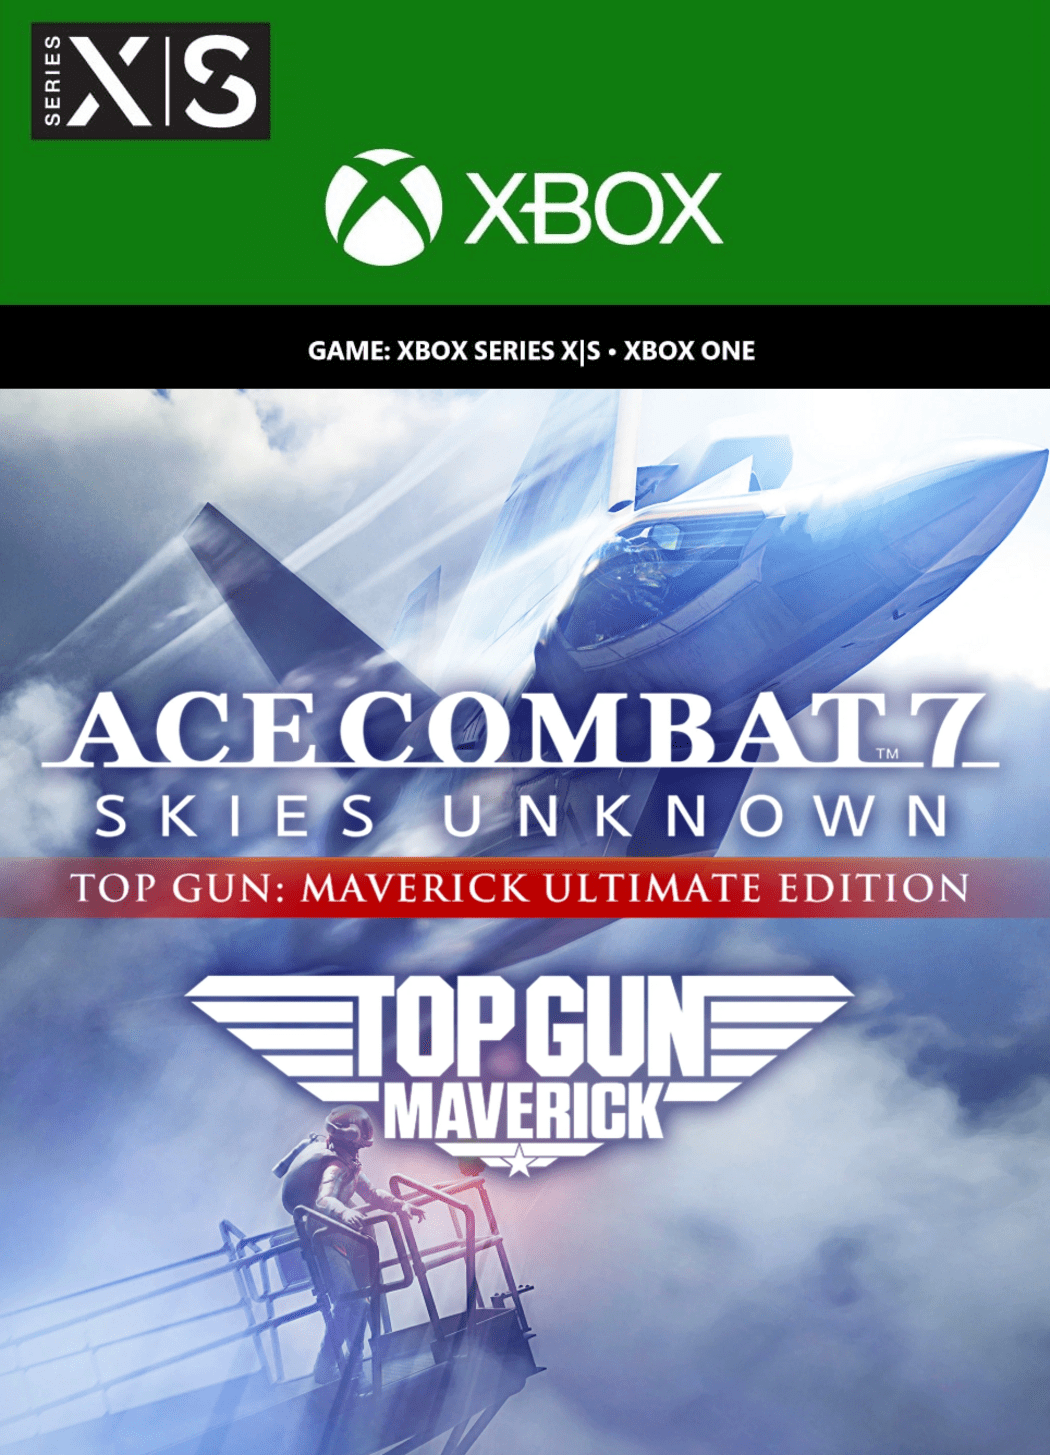 Ace Combat 7: Skies Unknown - Maverick Edition